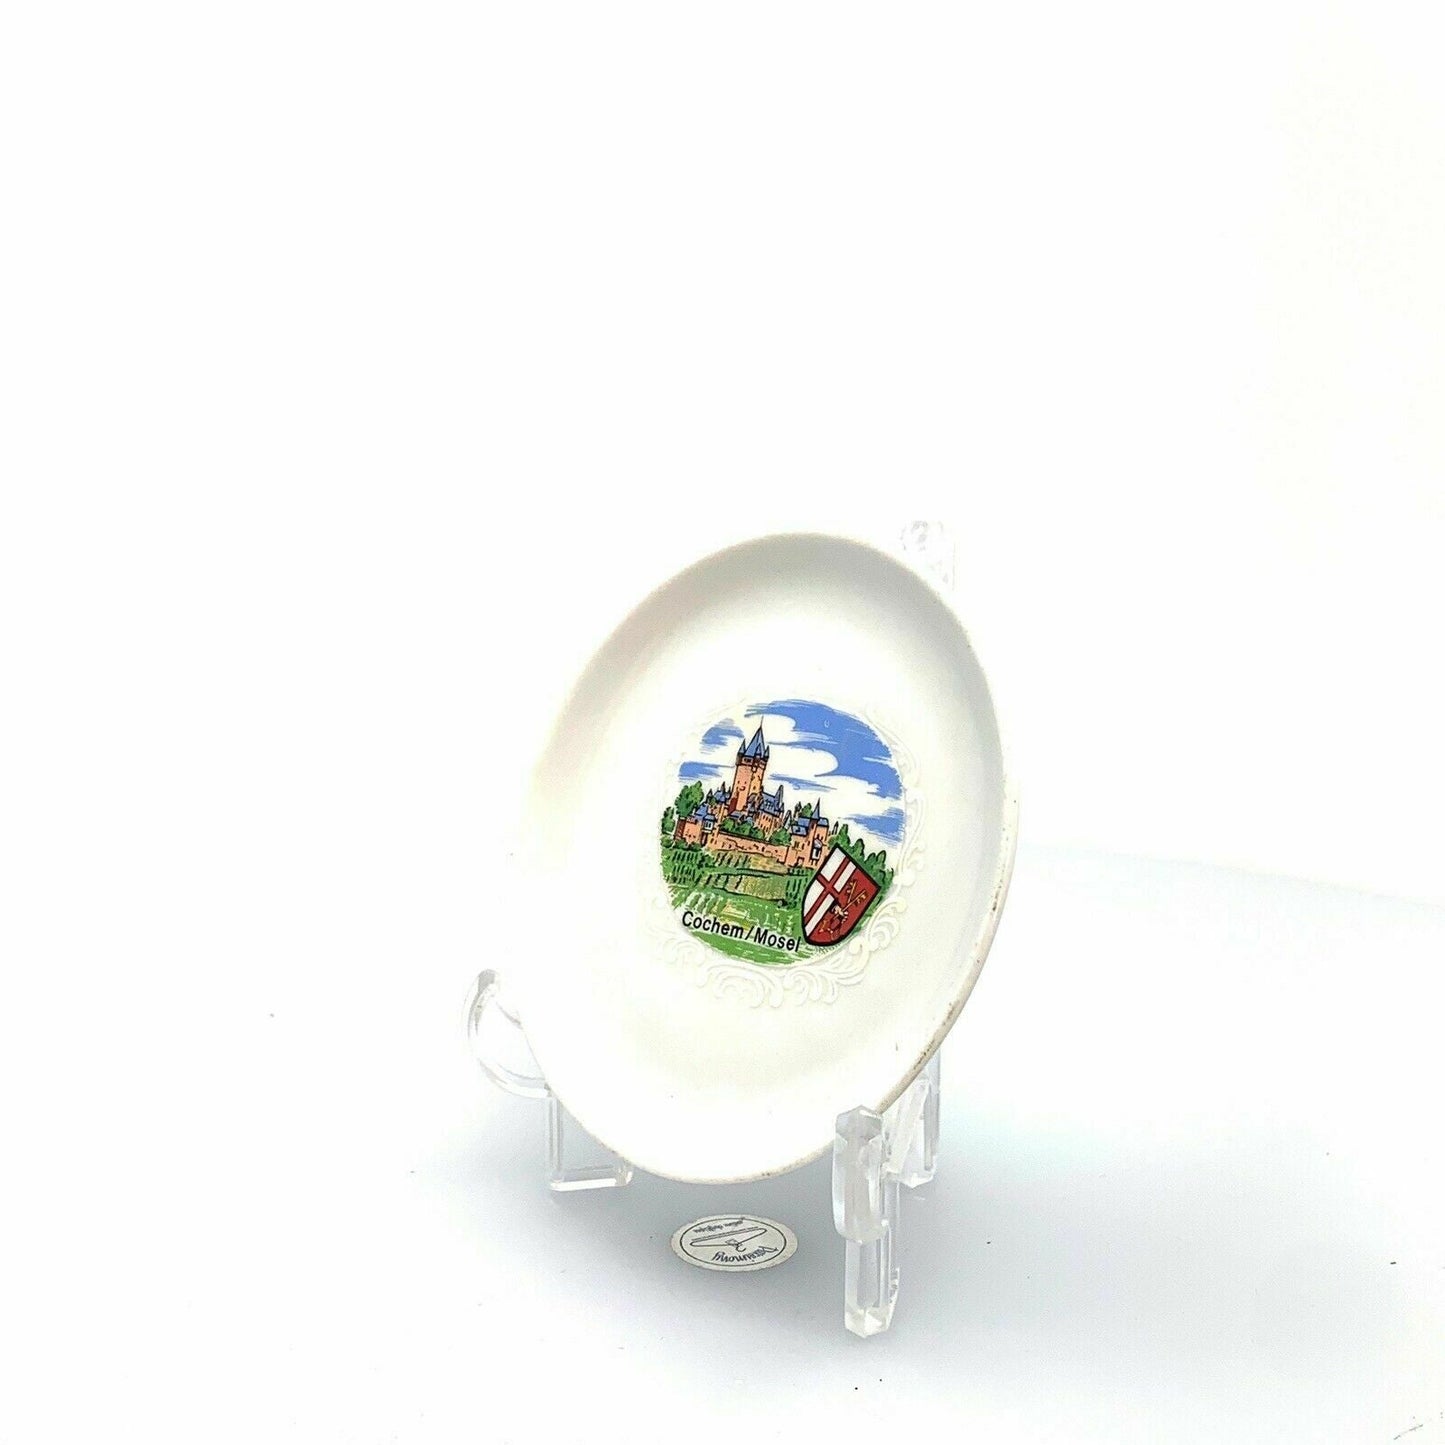 Exquisite Cochem Mosel Castle Souvenir Porcelain Teabag Plate - Vintage-inspired - White - 3" - Very Good Condition